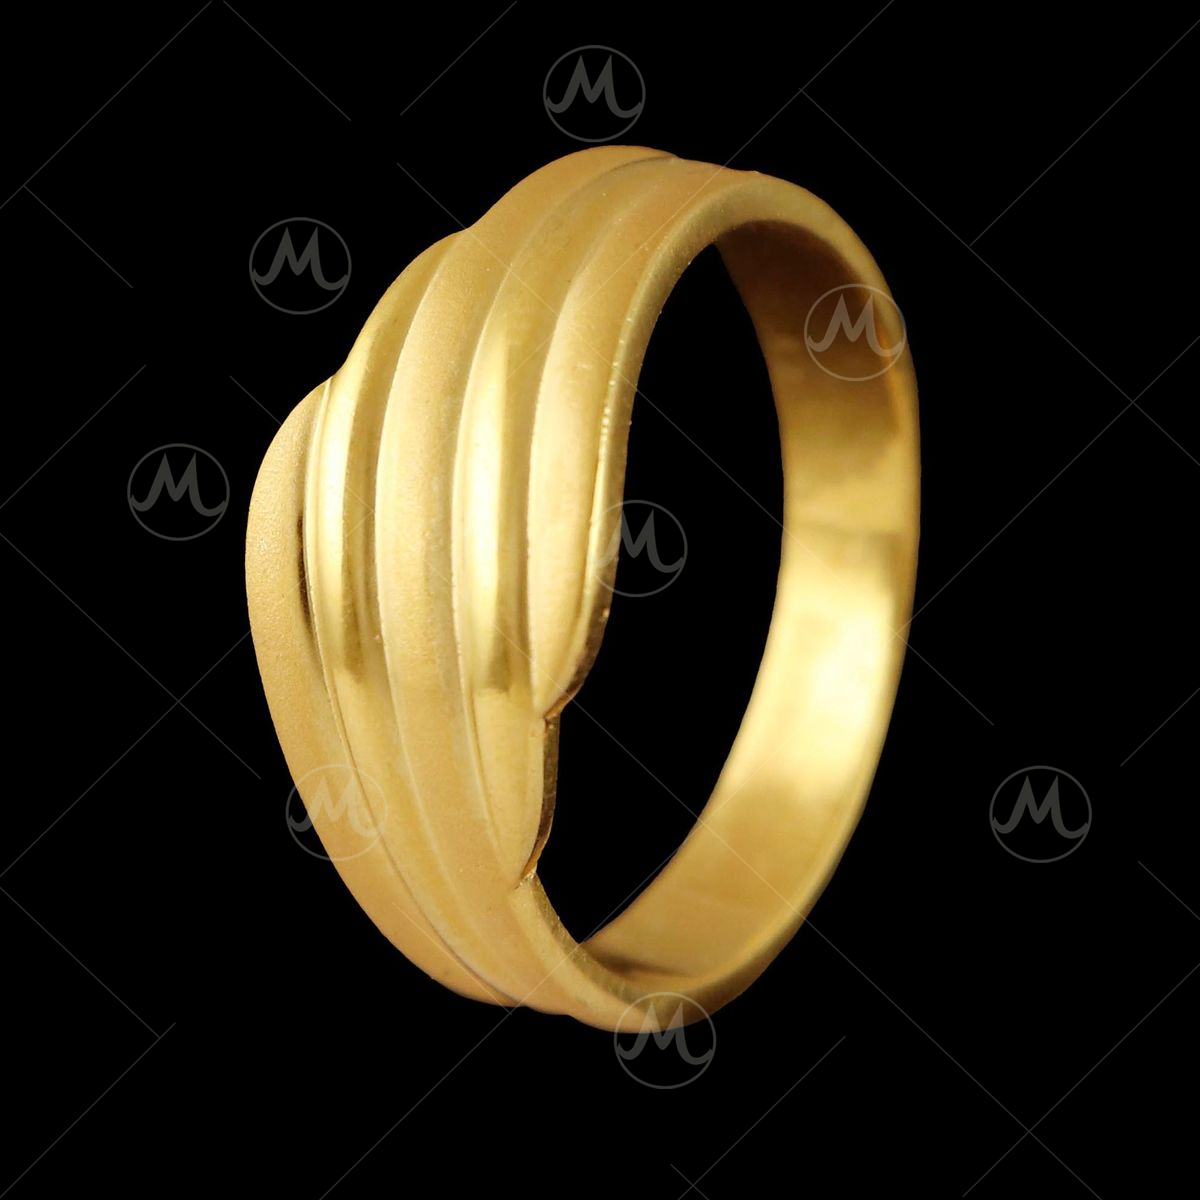 Geru Finger Ring- Traditional Finger Ring at Rs 220.00 | Designer Finger  Ring, फैशन फिंगर रिंग, फैशन अंगूठी - Beeline, Pune | ID: 2851283275655